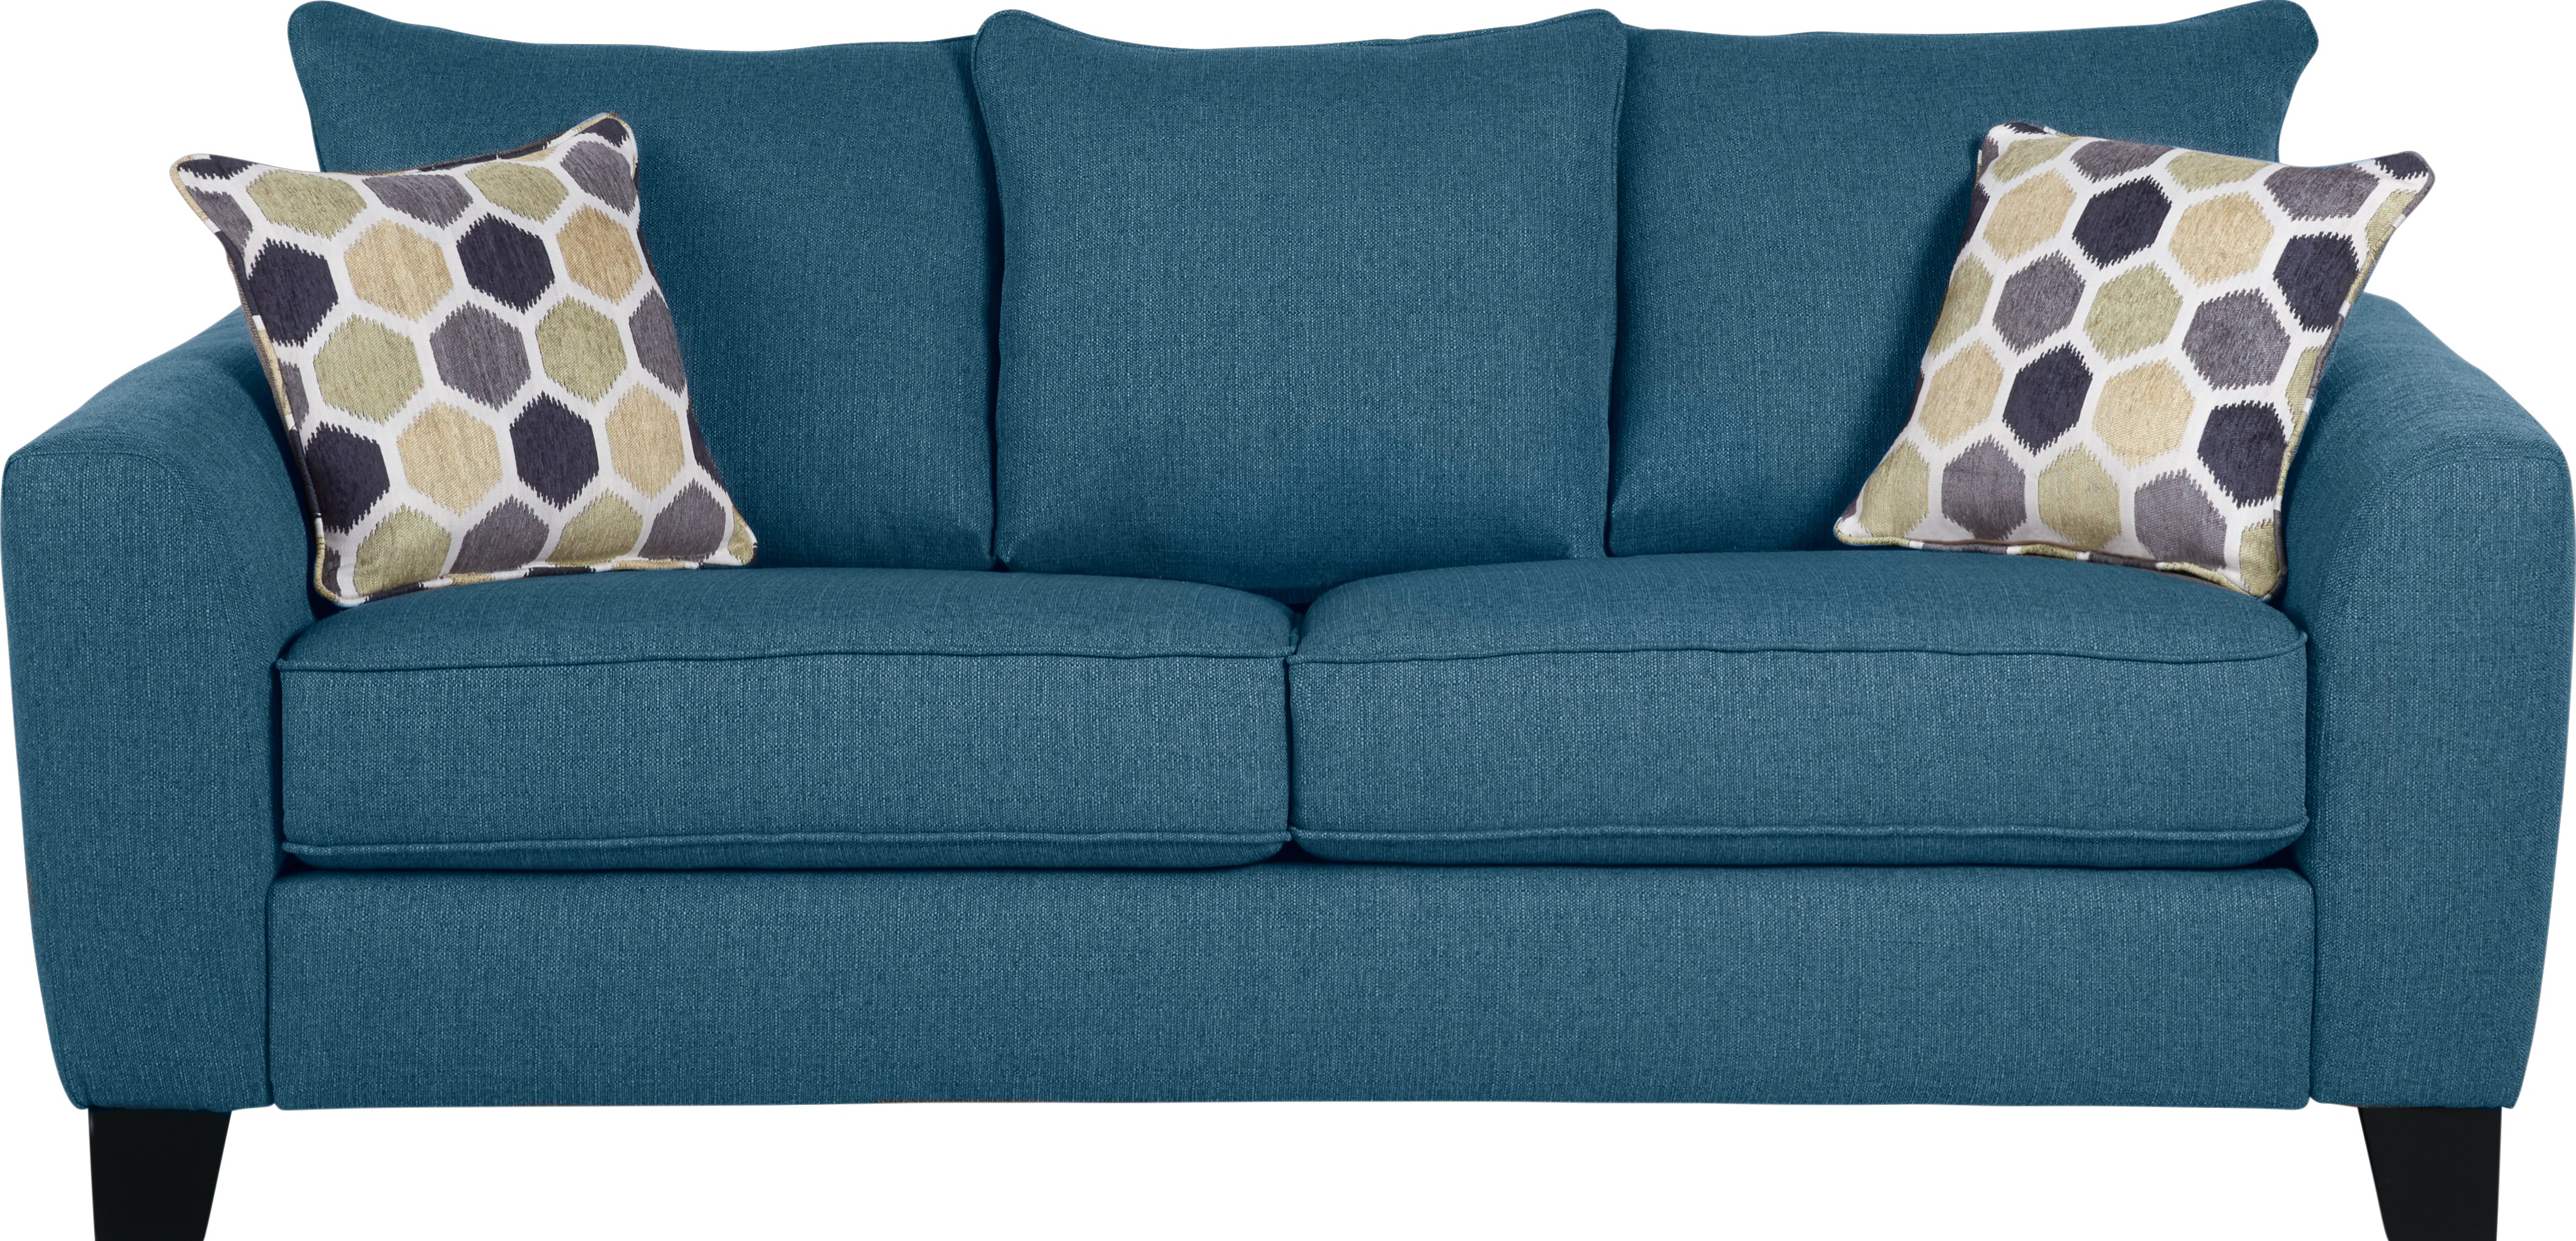 wayfair blue sofa bed